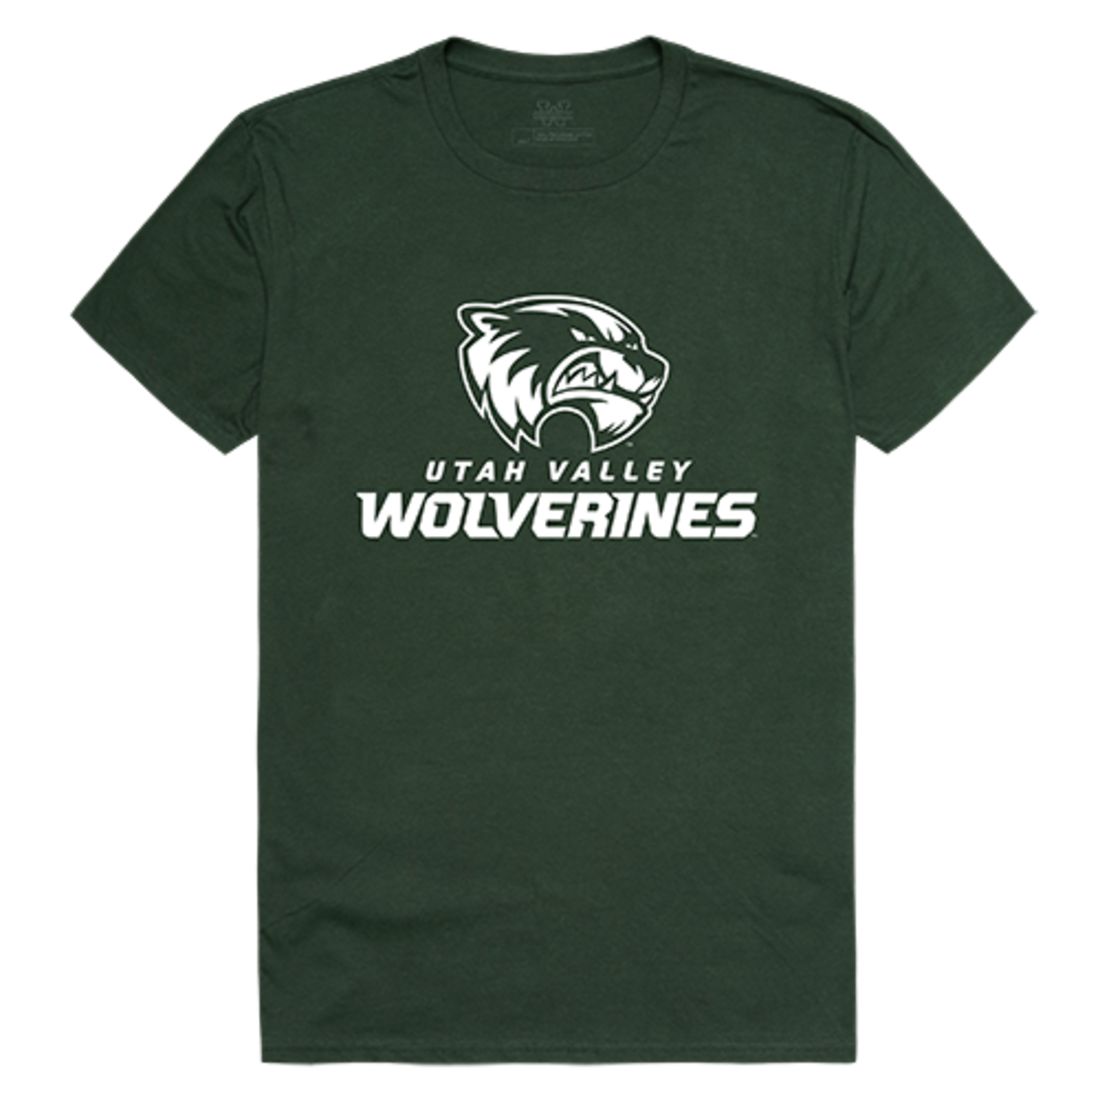 UVU Utah Valley University Wolverines NCAA The Freshman Tee T-Shirt Forest-Campus-Wardrobe